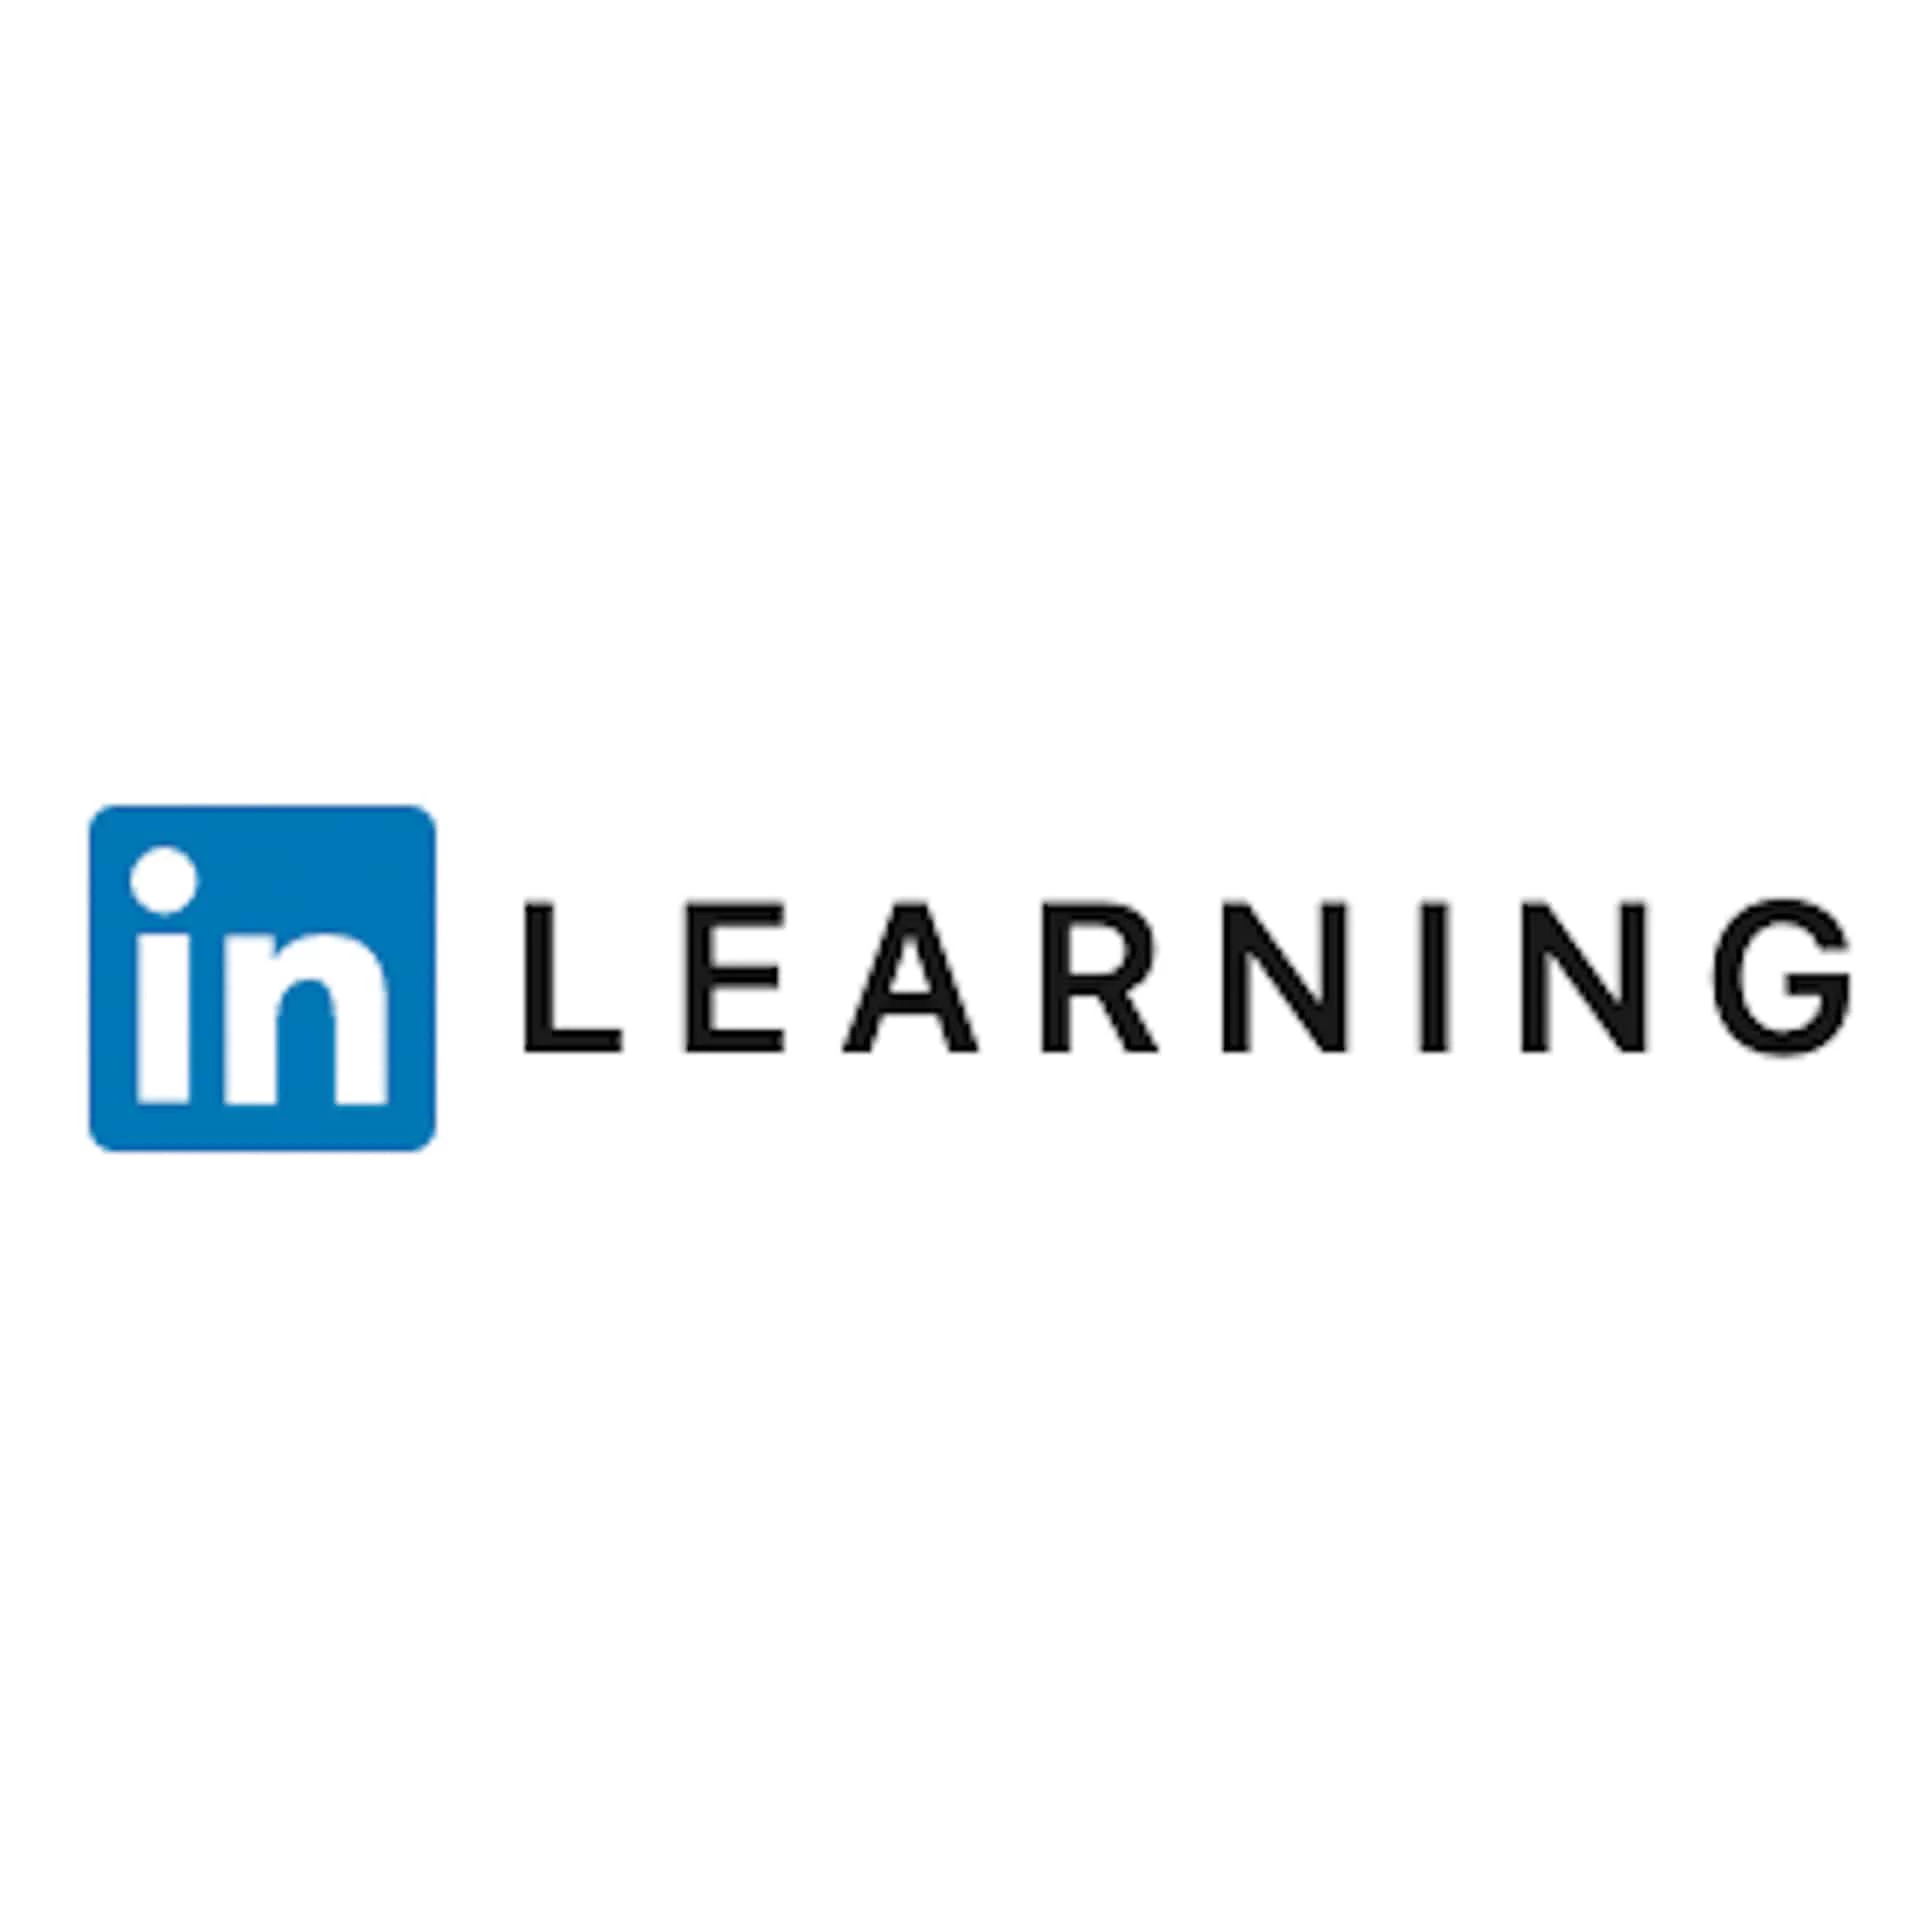 LinkedIn Learning logo on white background